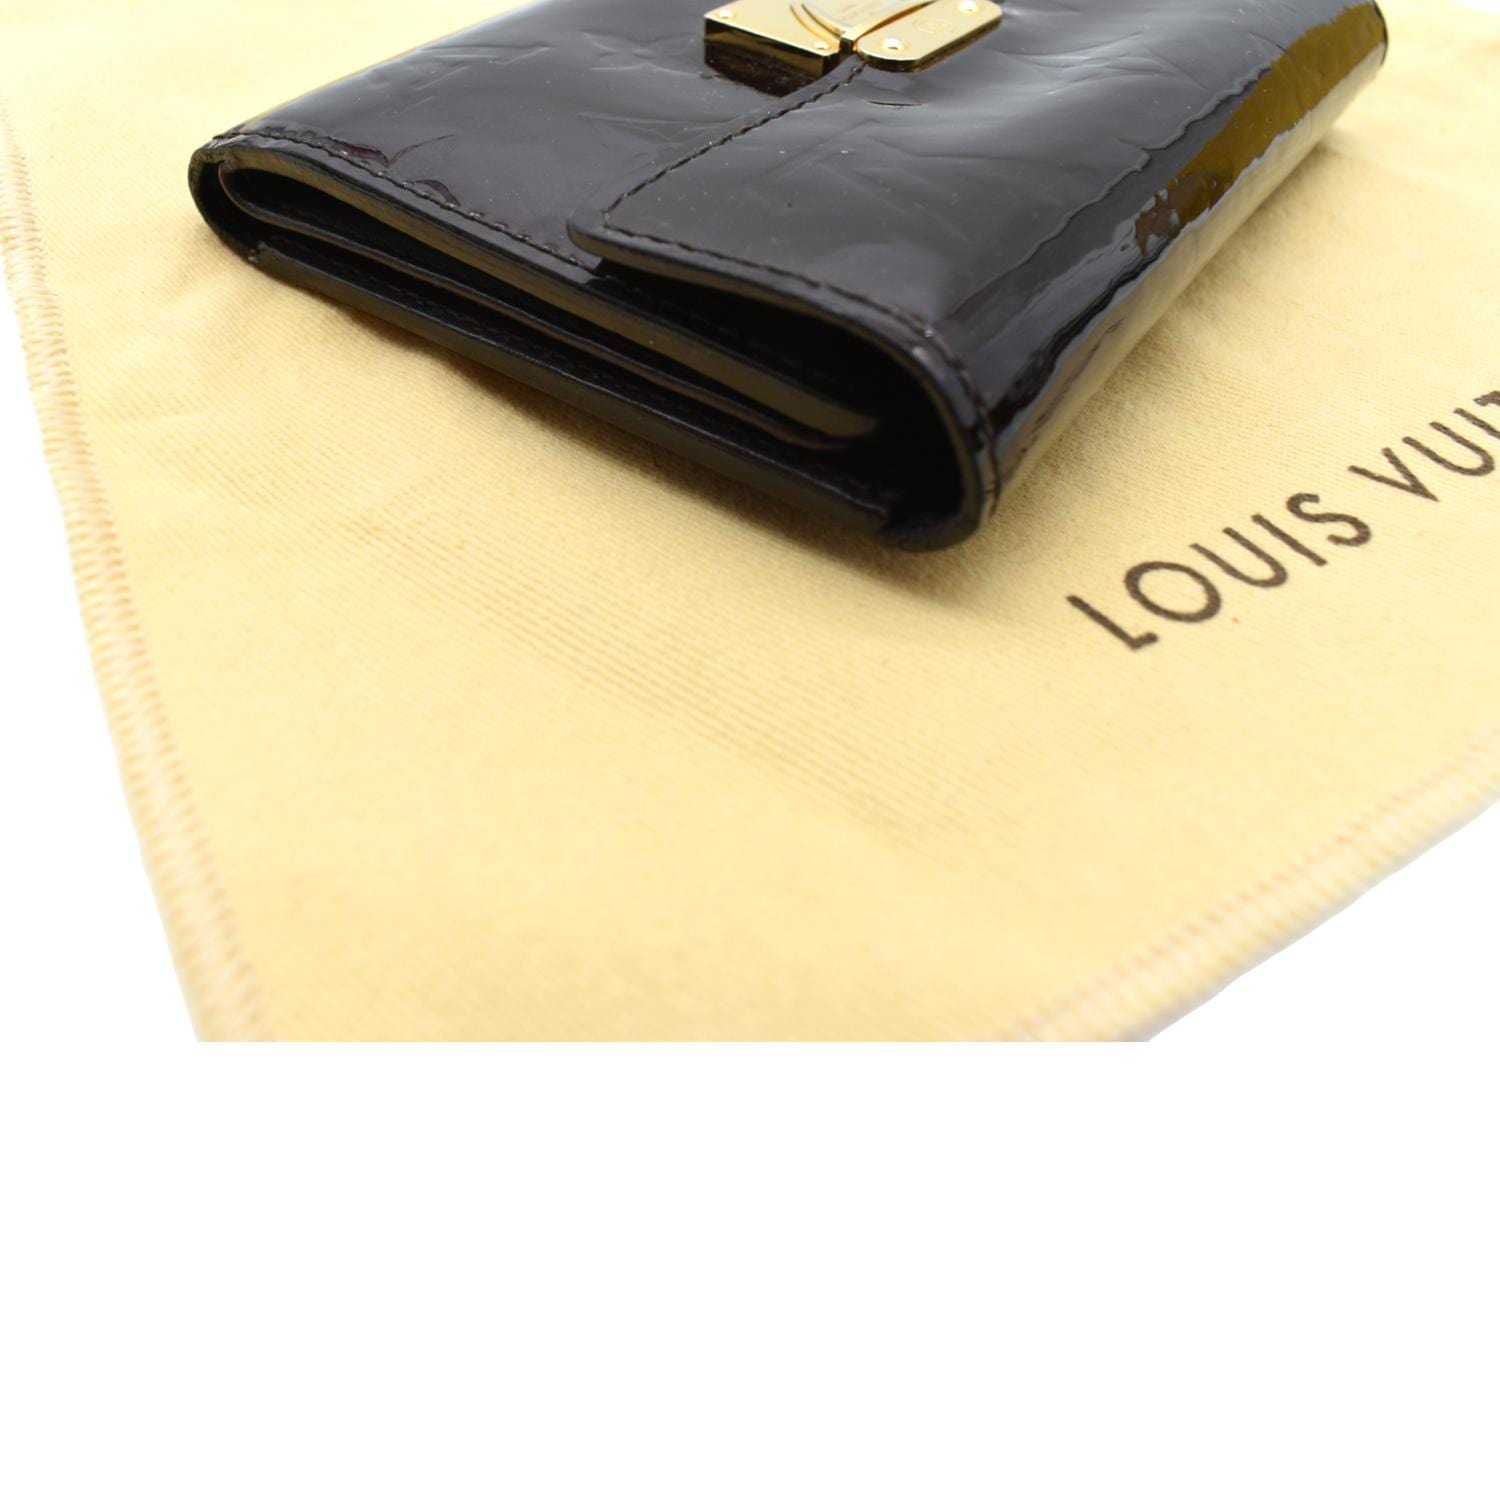 Louis Vuitton Damier Koala wallet [discontinued design], Luxury